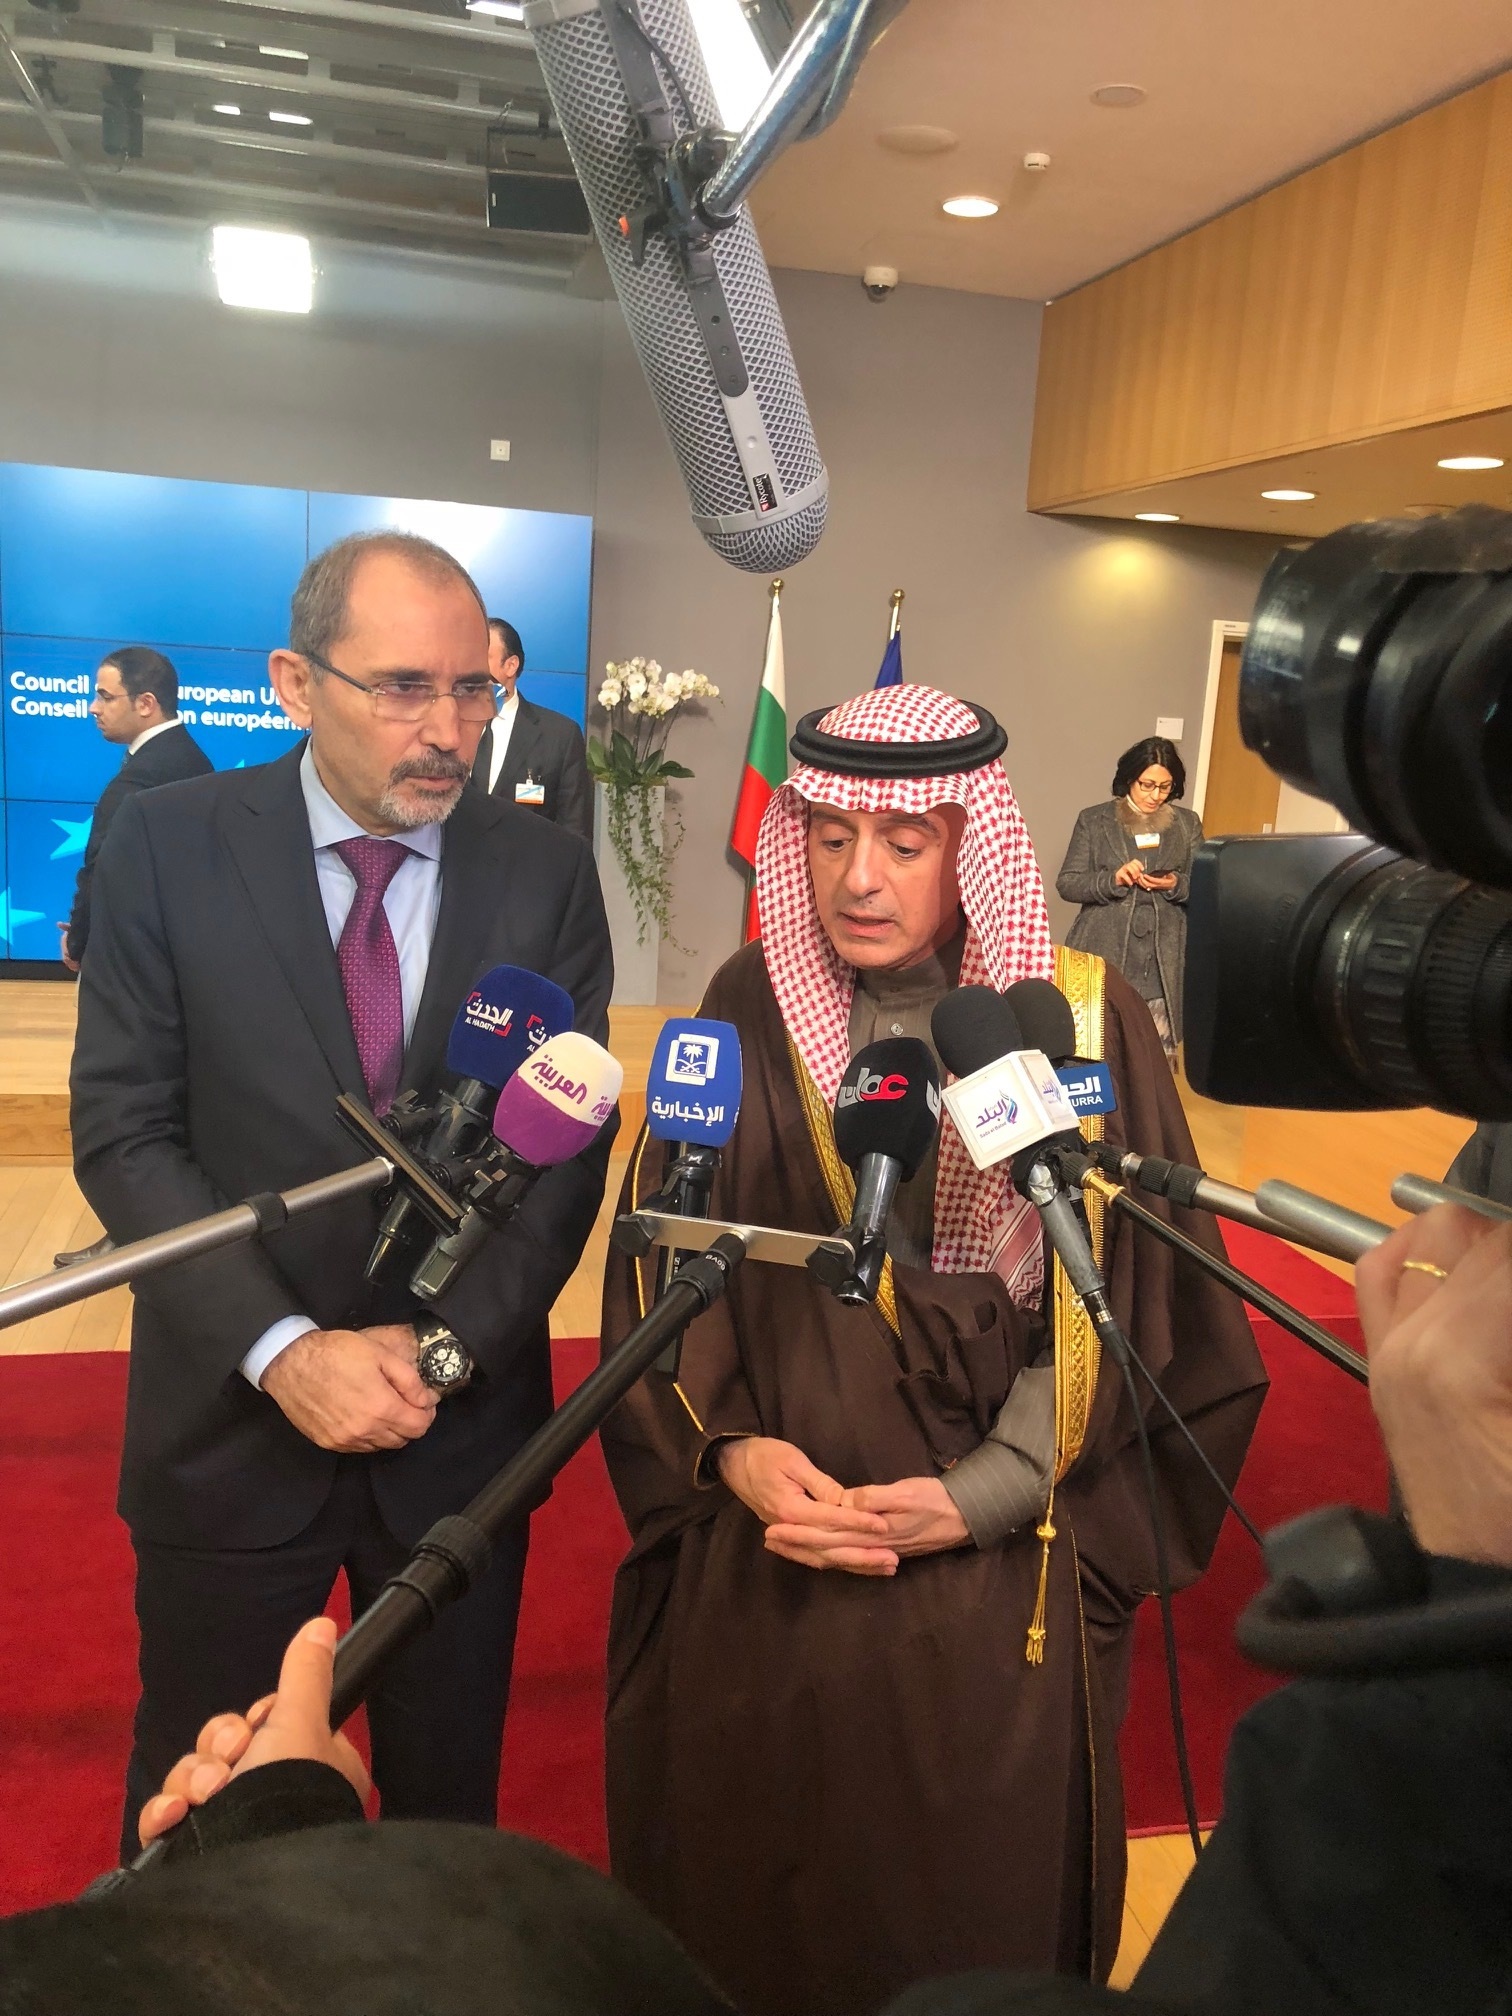 Adel AL-JUBEIR, Saudi foreign Minister speaking to Arab journalists